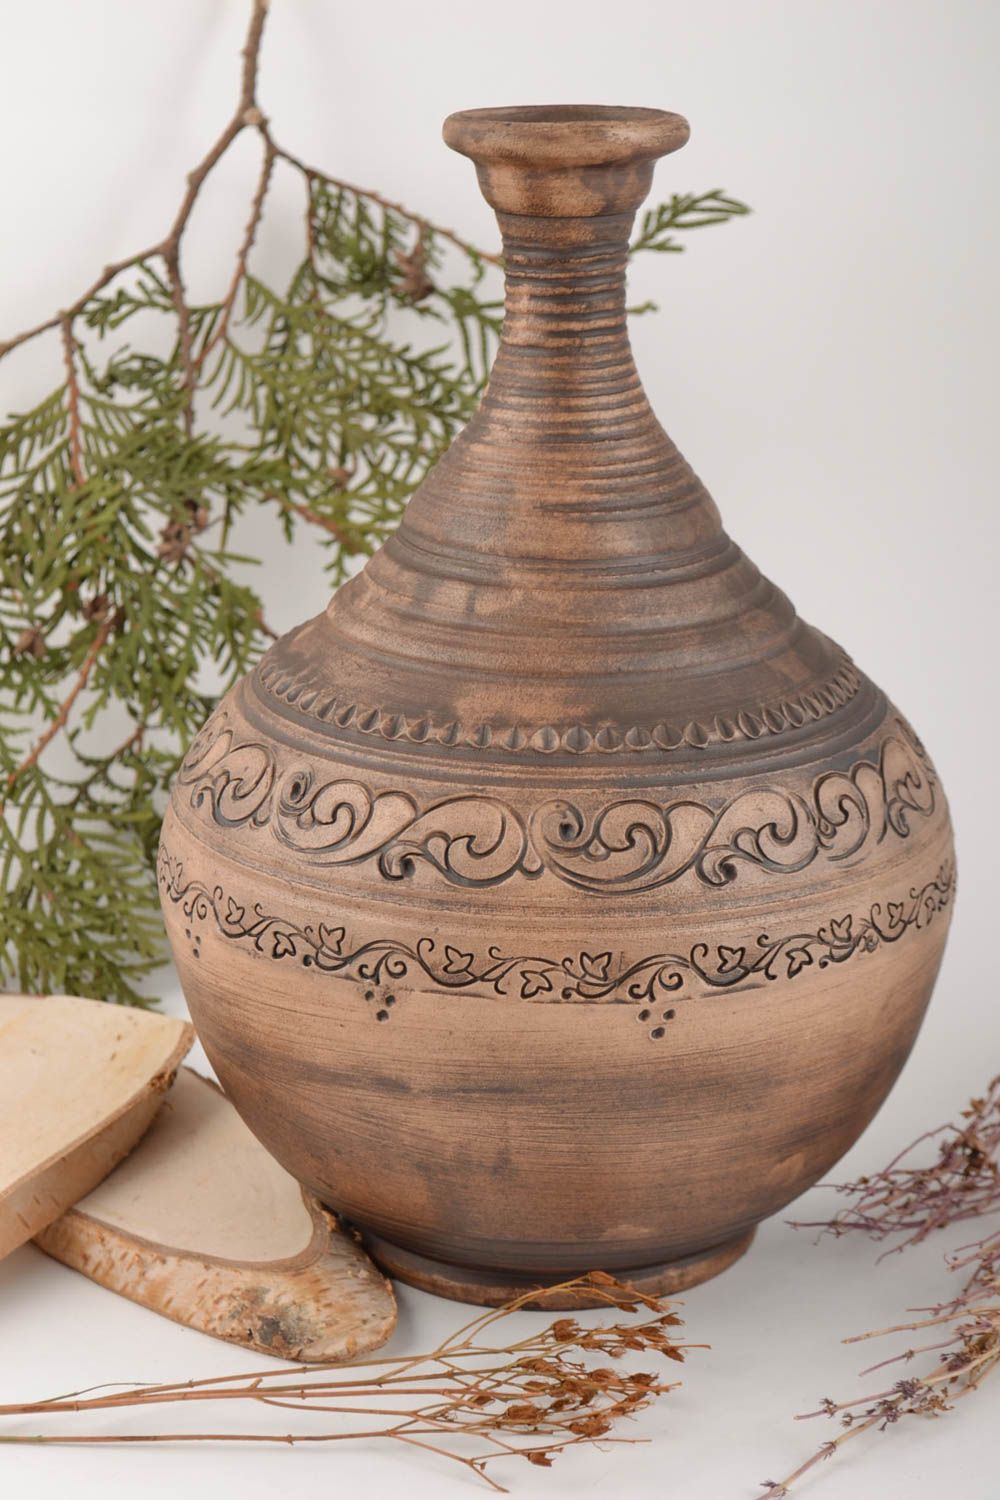 60 oz ceramic wine carafe in Greek style amphora 2,7 lb photo 1